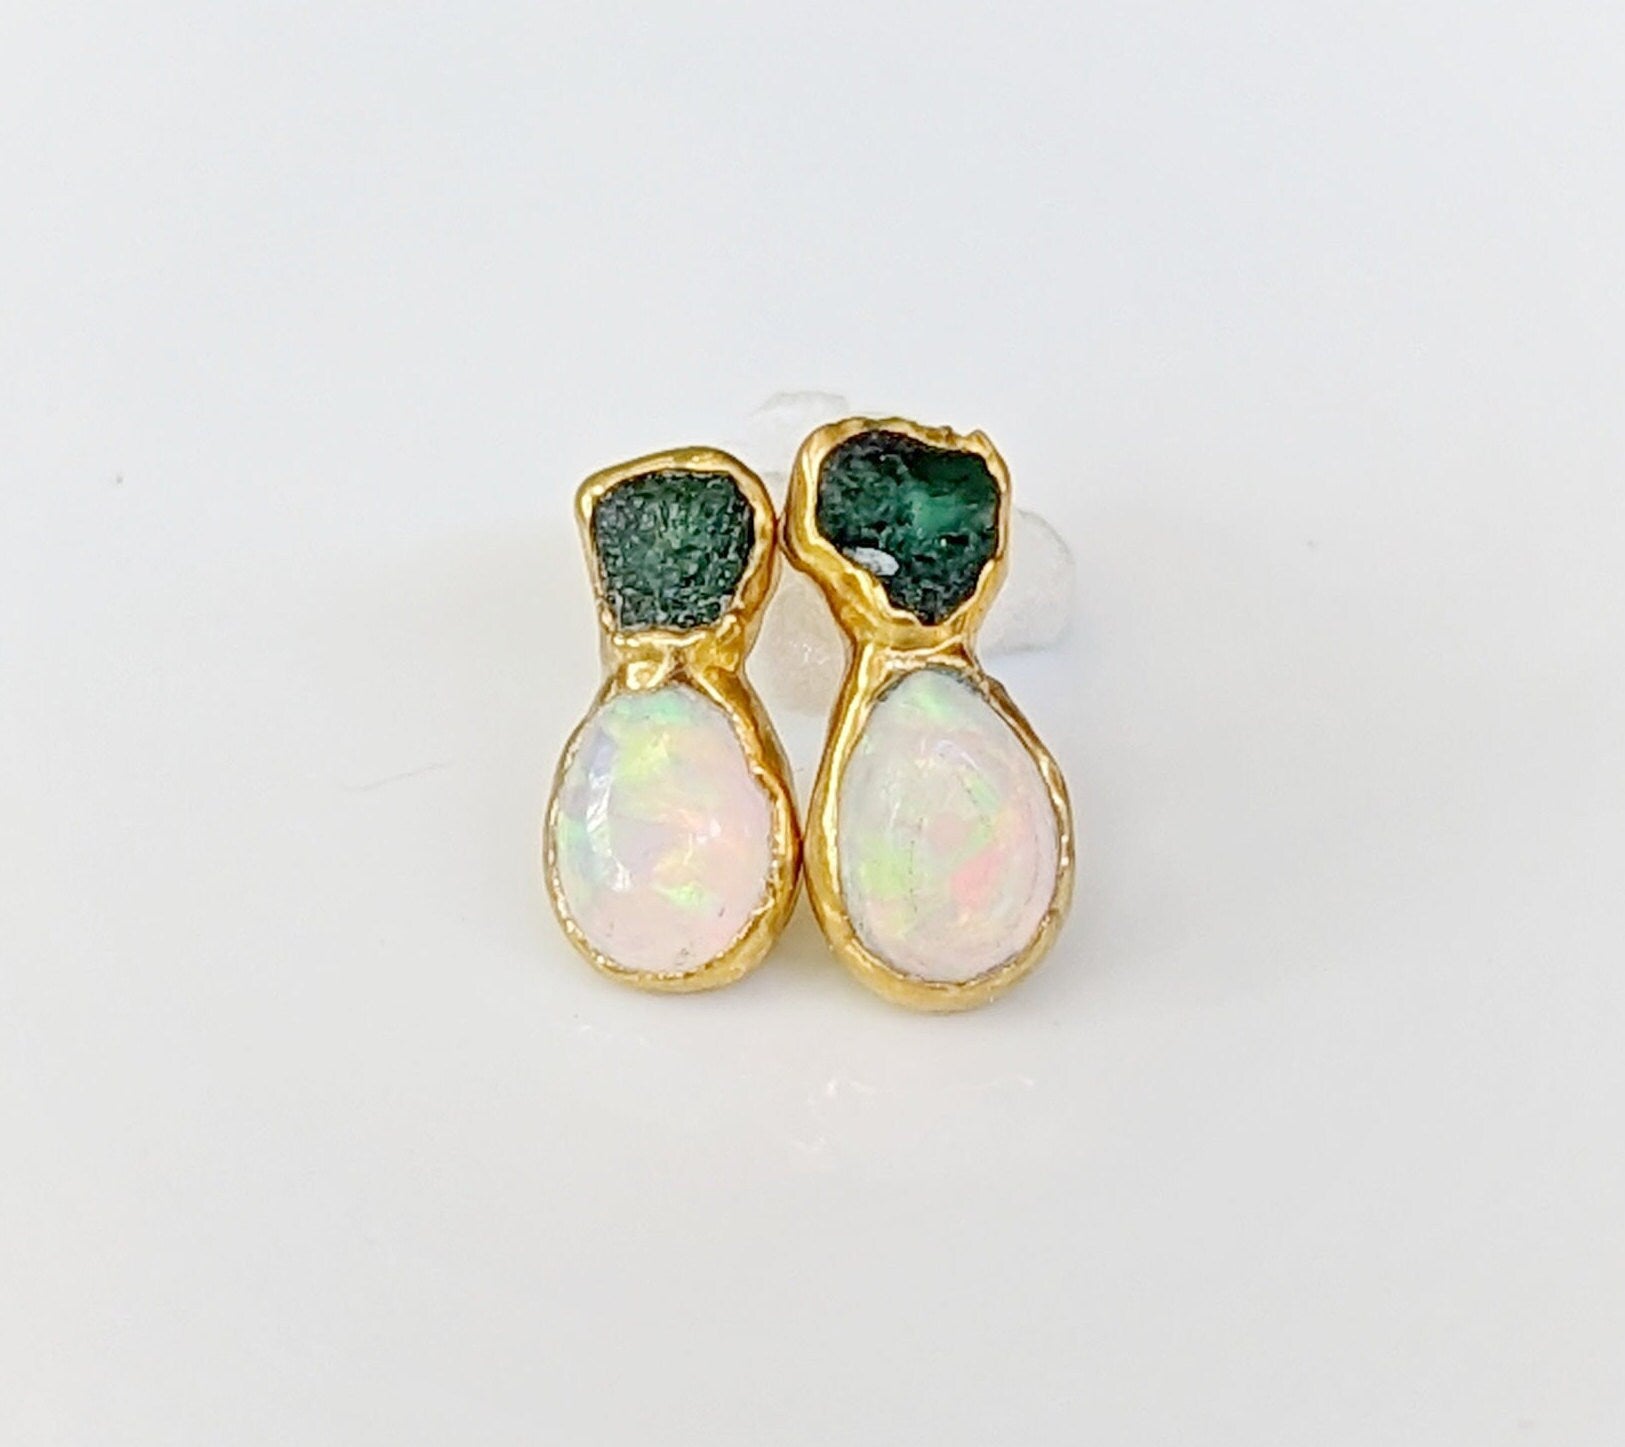 Raw Emerald and Opal stud earrings